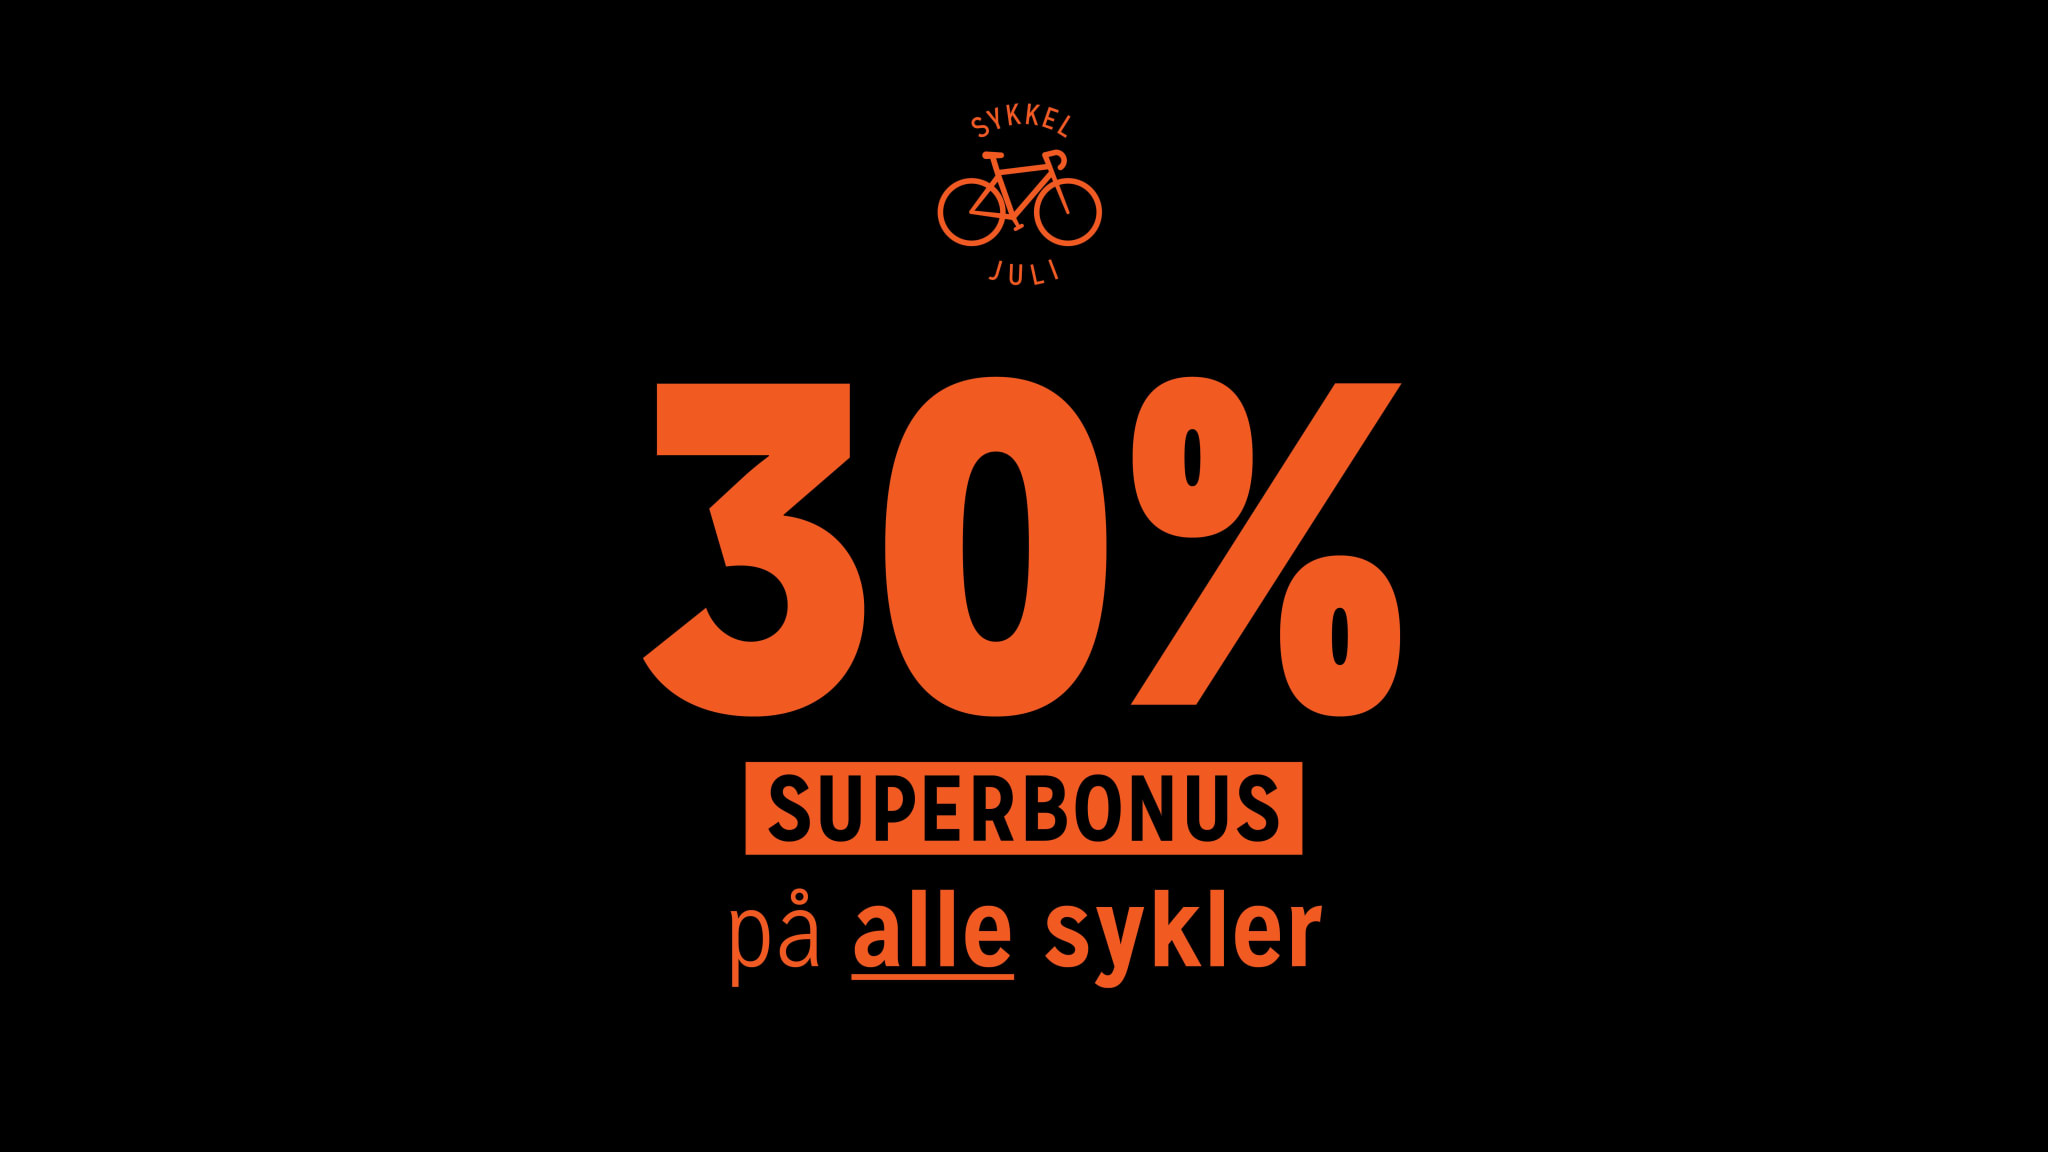 Sykkel juni 30% superbonus